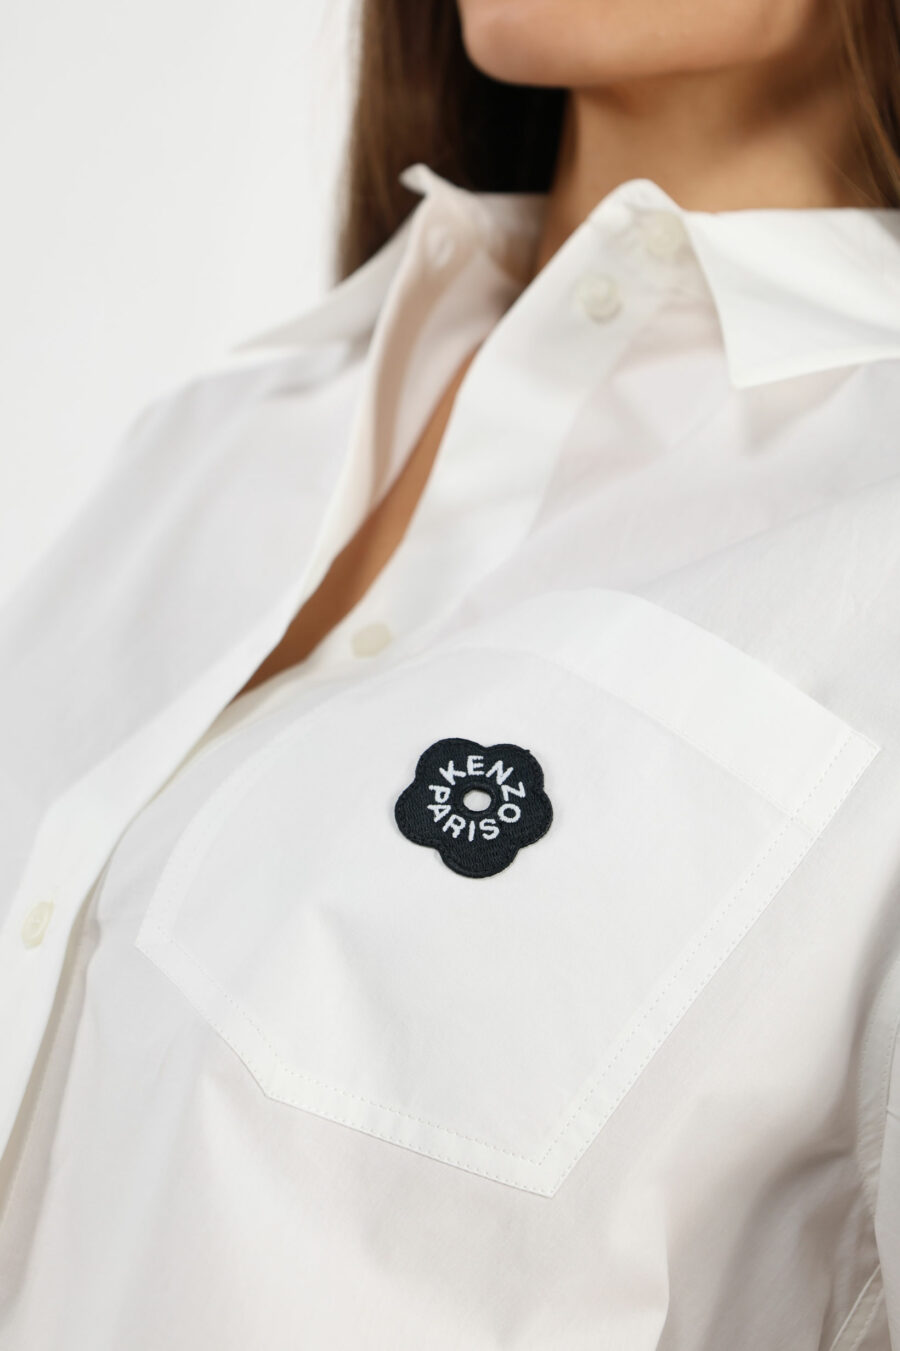 Camisa branca de manga curta com mini logótipo "boke flower" preto - 109577